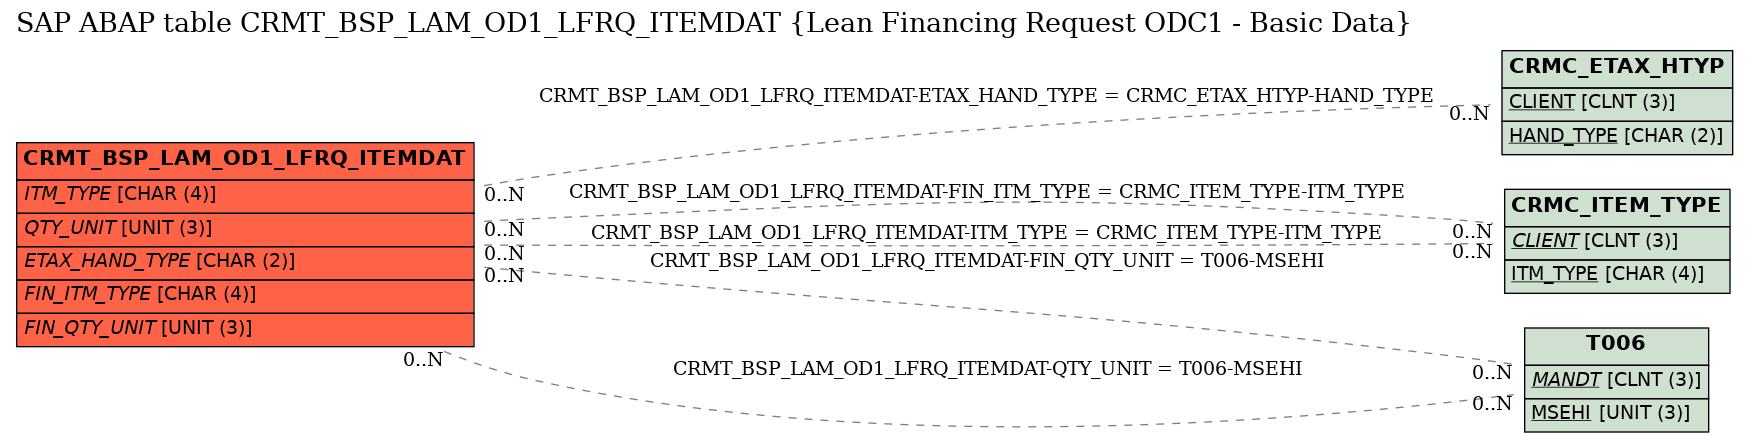 E-R Diagram for table CRMT_BSP_LAM_OD1_LFRQ_ITEMDAT (Lean Financing Request ODC1 - Basic Data)